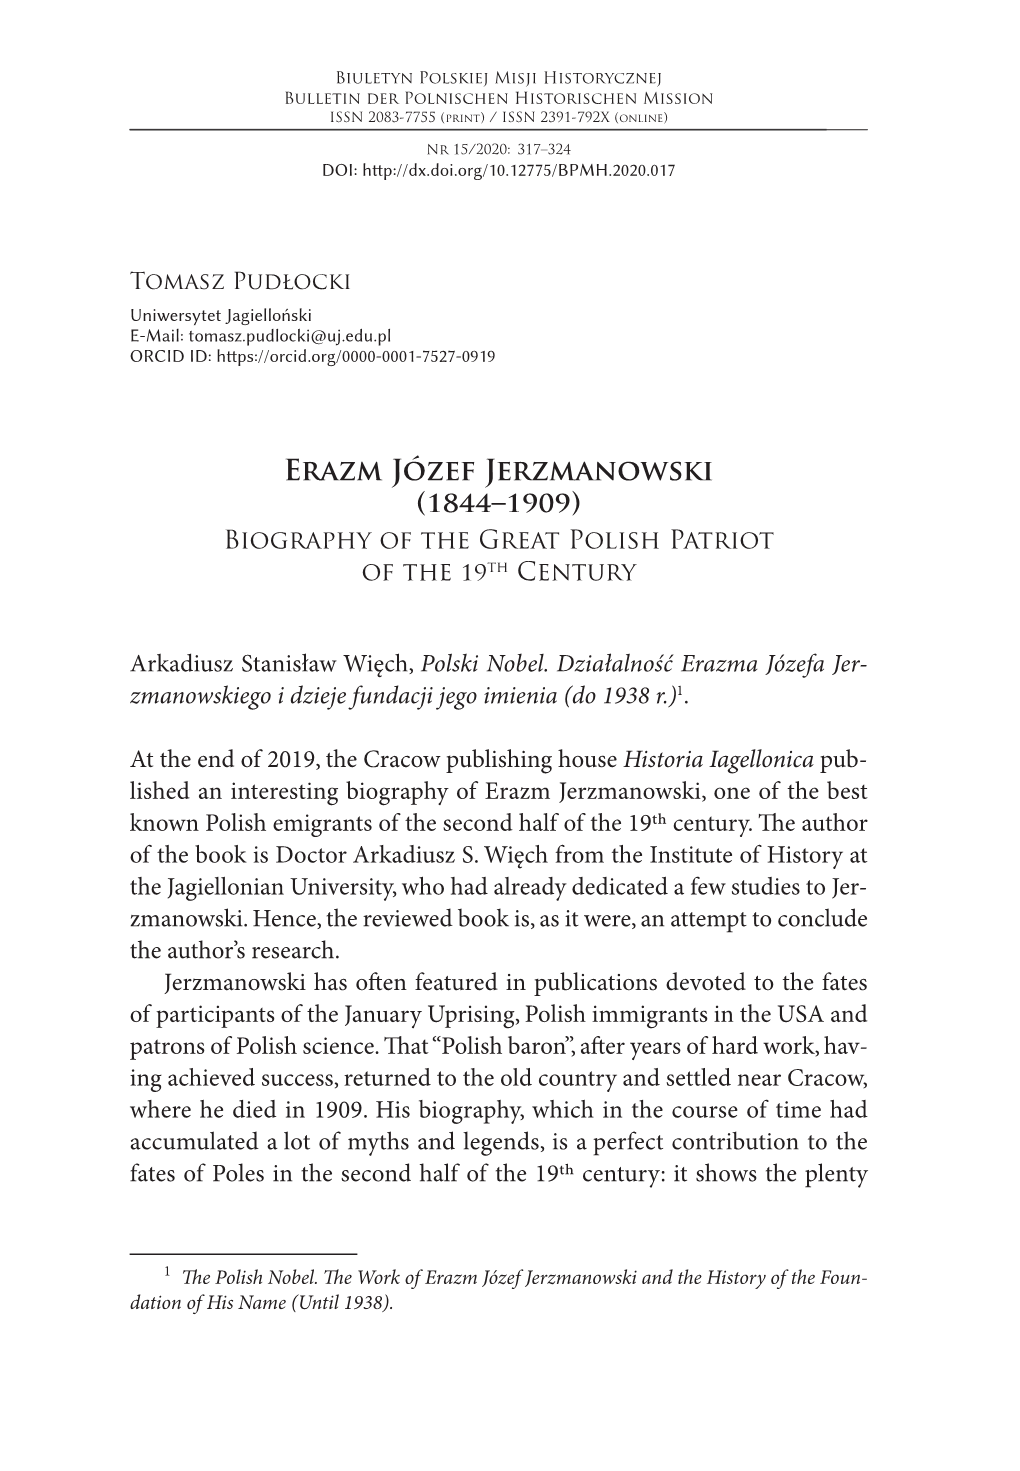 Erazm Józef Jerzmanowski (1844–1909) Biography of the Great Polish Patriot of the 19Th Century